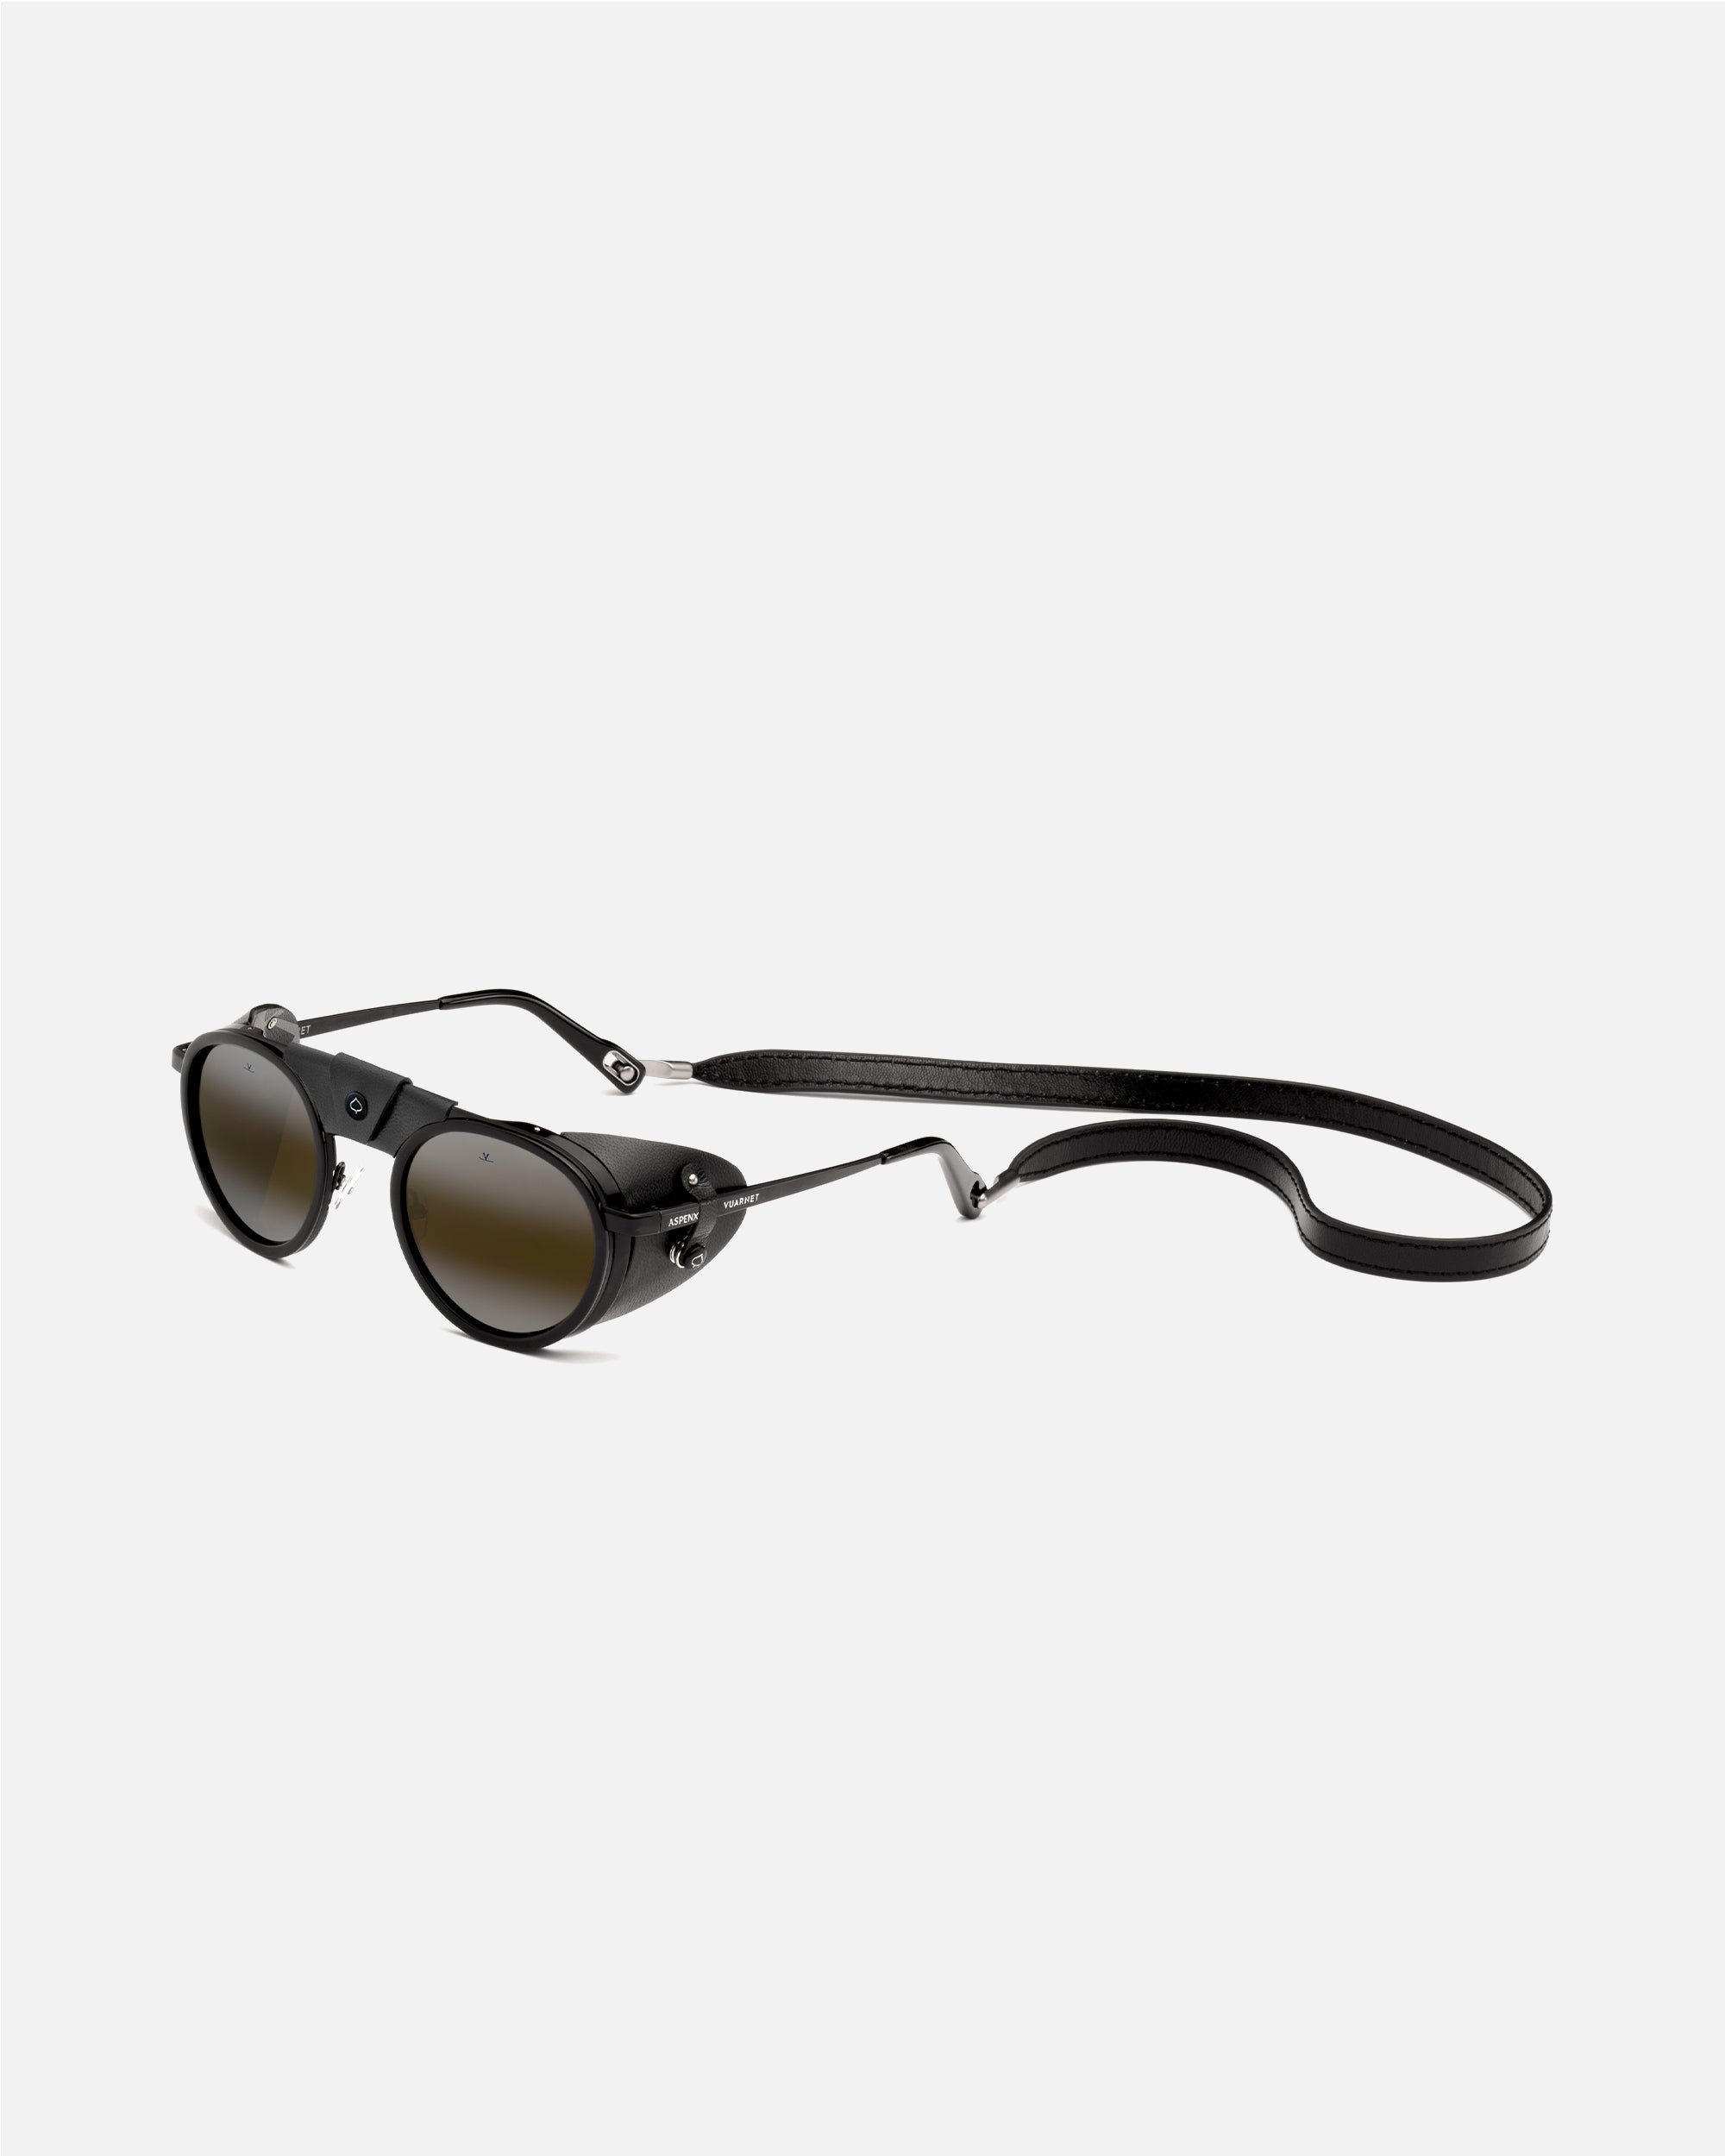 Vuarnet District 2001 Nightlynx Sunglasses -Night Vision Mineral Glass  Lenses - Flight Sunglasses